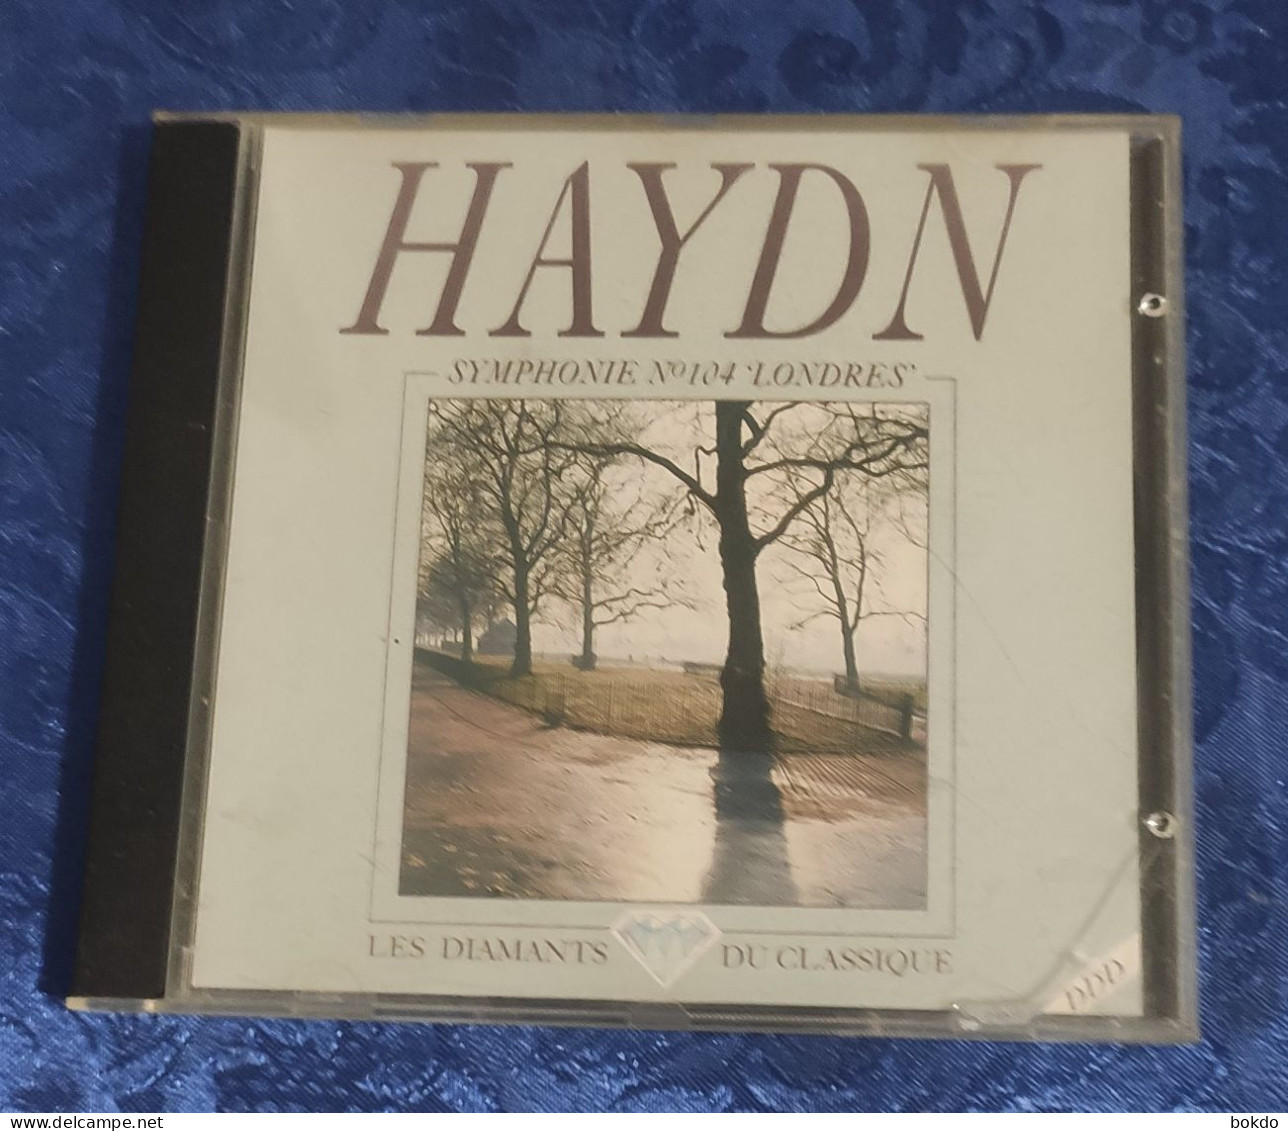 HAYDN - Symphonie N° 104 "londres" - Classique